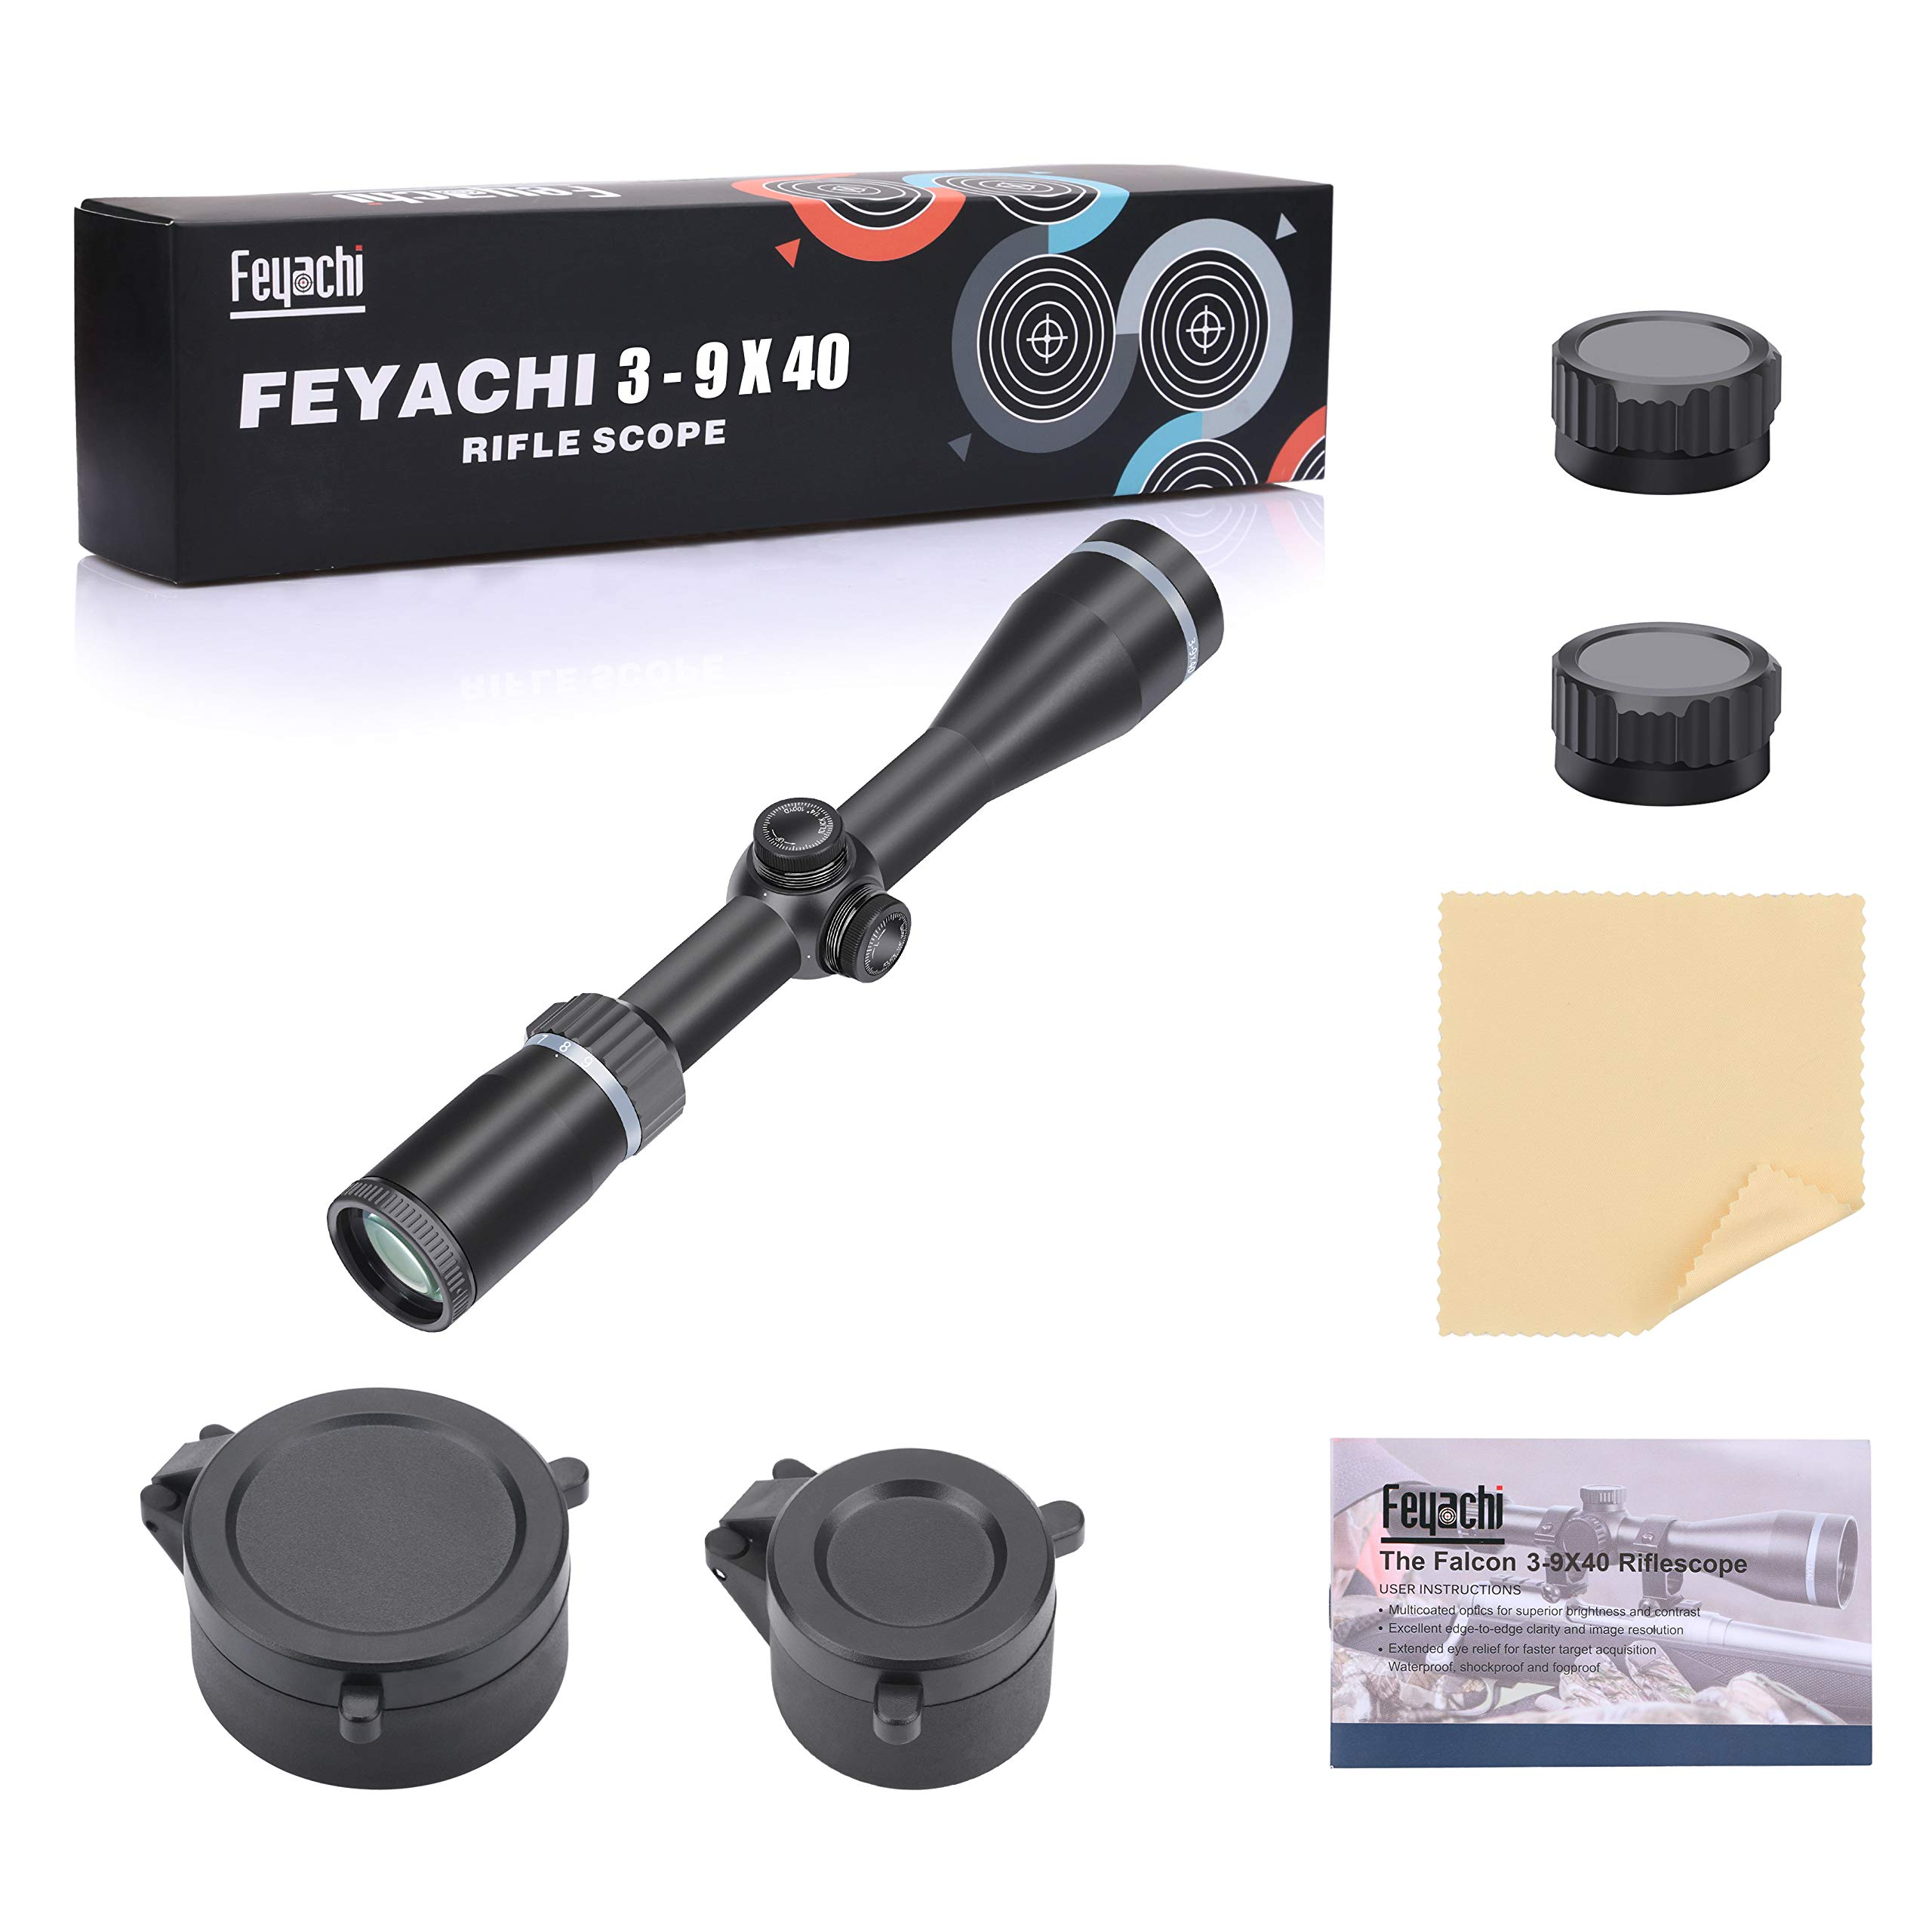 Feyachi Falcon 3-9x40mm Rifle Scope, BDC Reticle 4-inch Long Eye Relief Second Focal Plane Riflescopes, Matte Black 1 inch Tube